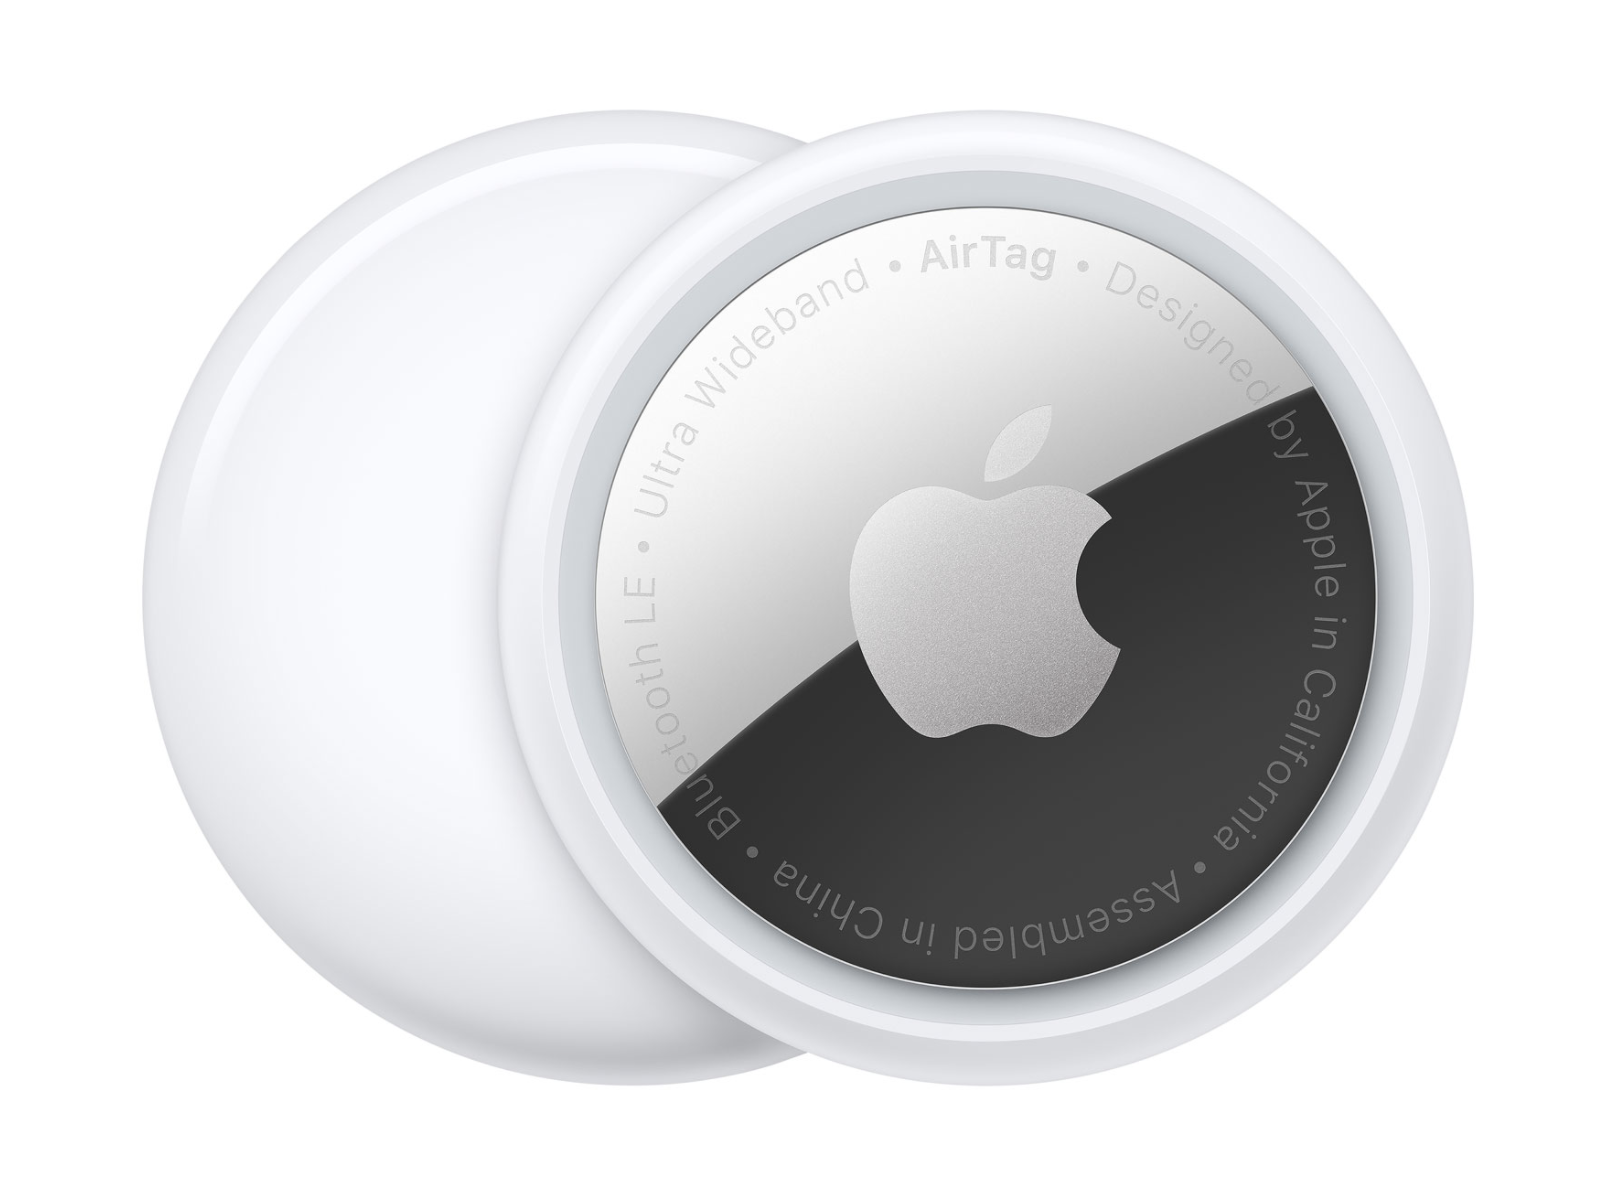 Apple AirTag Bluetooth Item Tracker